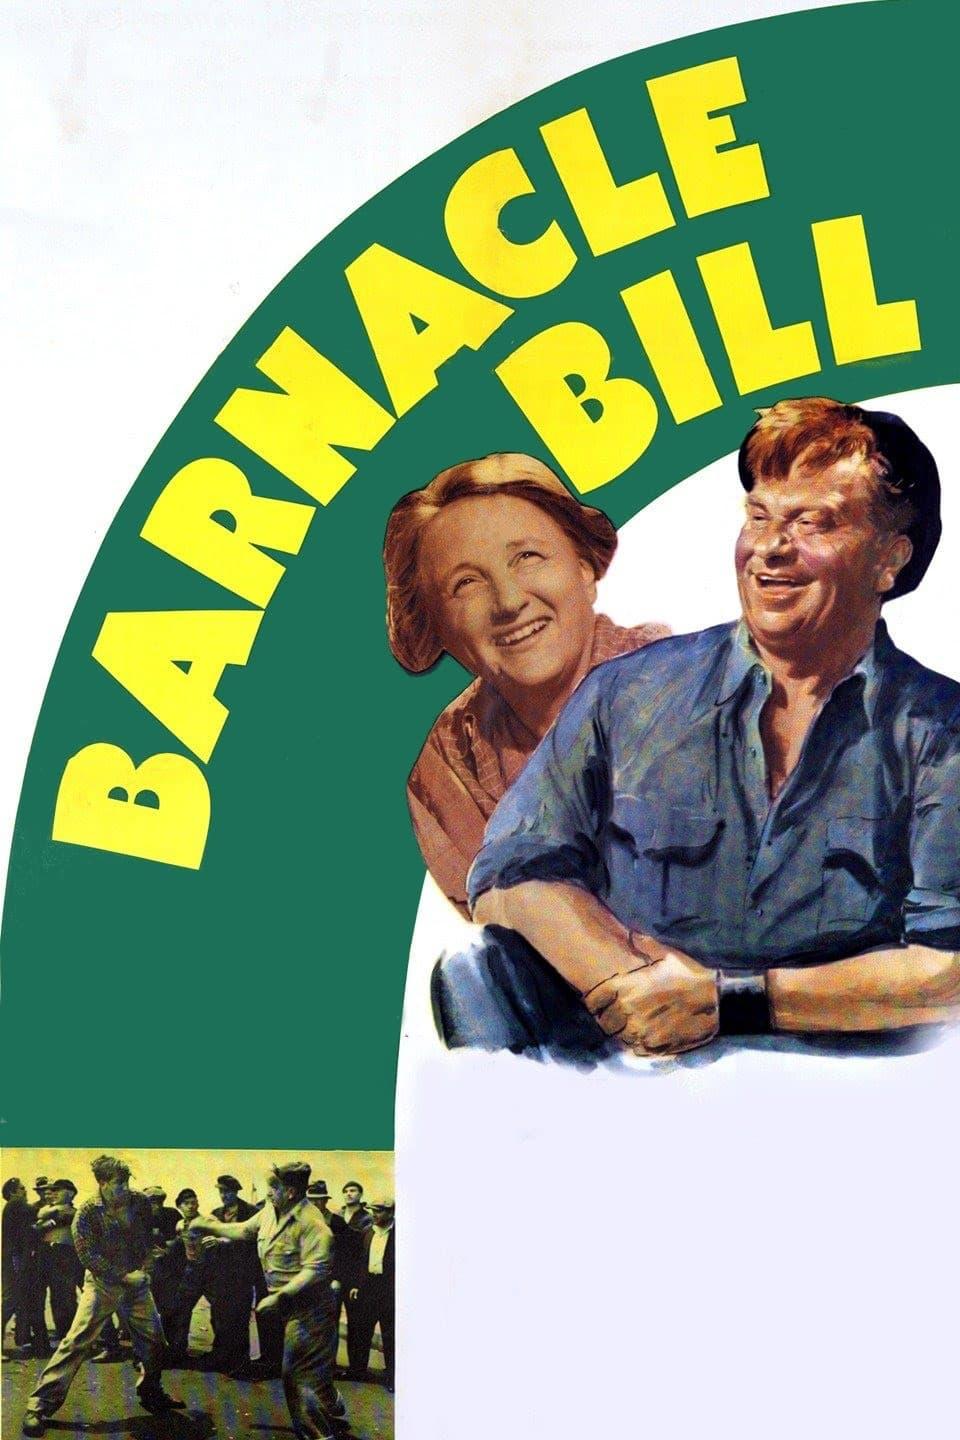 Barnacle Bill poster